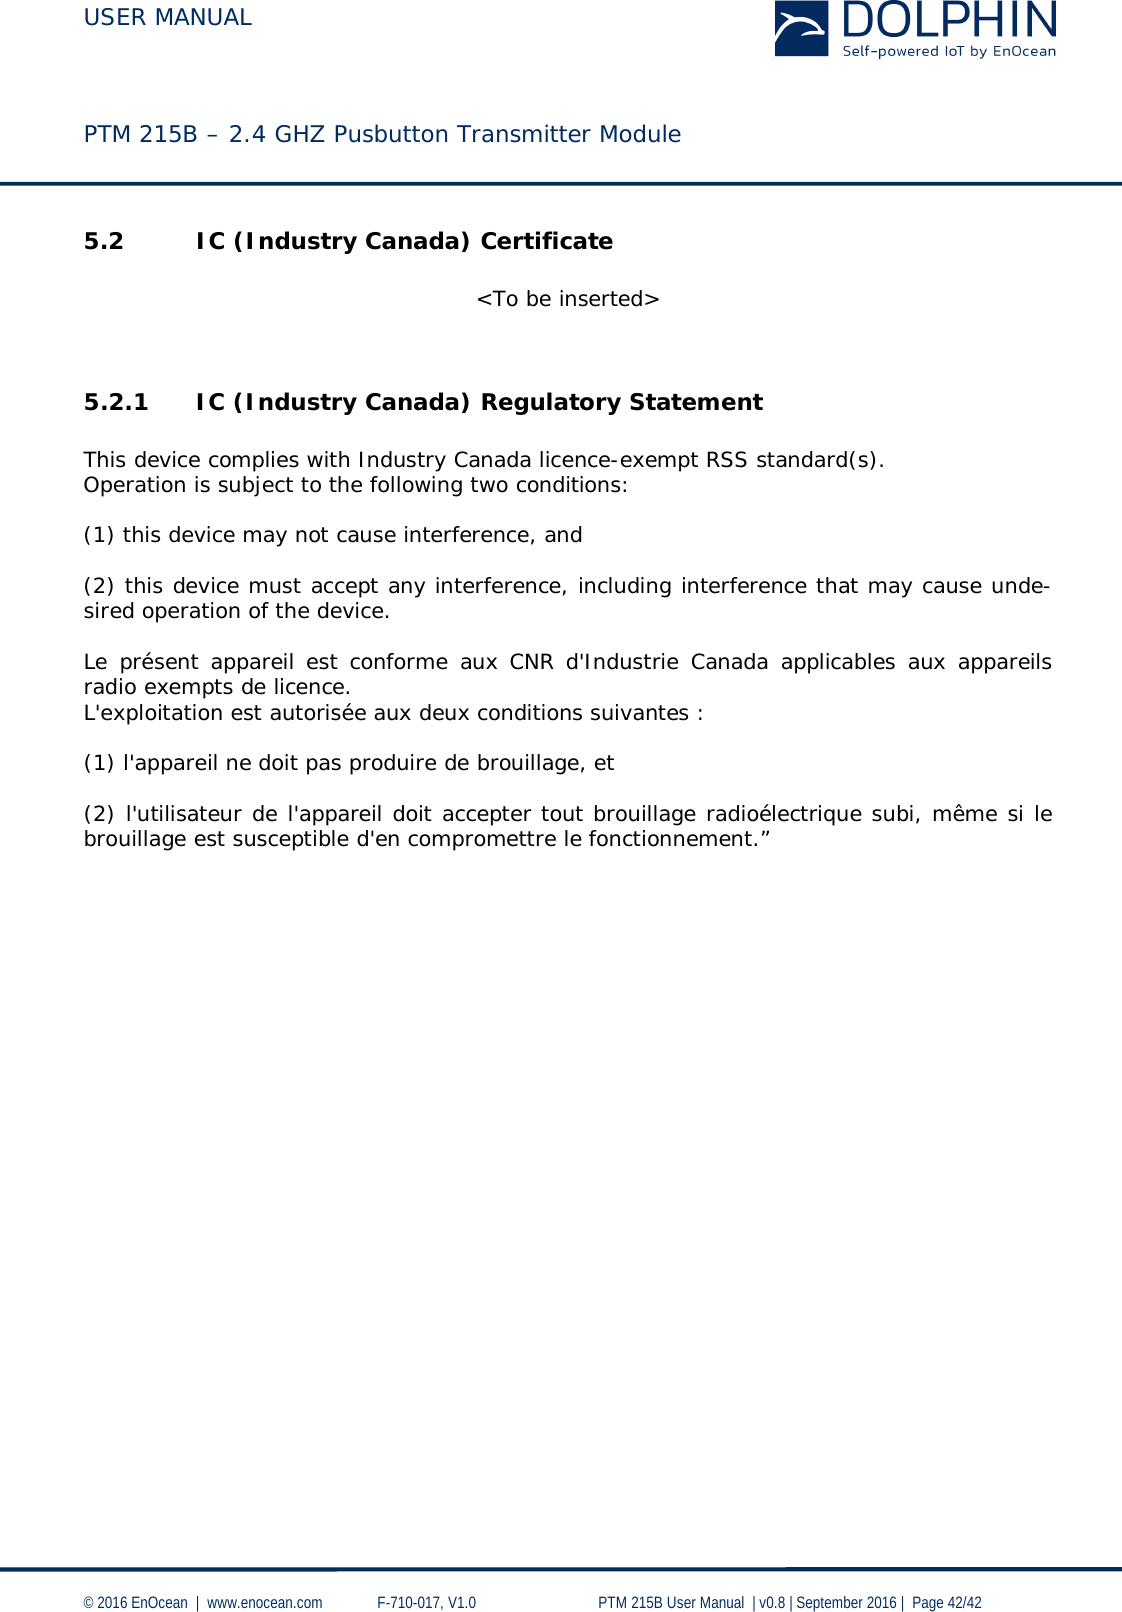  USER MANUAL    PTM 215B – 2.4 GHZ Pusbutton Transmitter Module  © 2016 EnOcean  |  www.enocean.com   F-710-017, V1.0        PTM 215B User Manual  | v0.8 | September 2016 |  Page 42/42  5.2 IC (Industry Canada) Certificate  &lt;To be inserted&gt;   5.2.1 IC (Industry Canada) Regulatory Statement  This device complies with Industry Canada licence-exempt RSS standard(s).  Operation is subject to the following two conditions:   (1) this device may not cause interference, and   (2) this device must accept any interference, including interference that may cause unde-sired operation of the device.  Le présent appareil est conforme aux CNR d&apos;Industrie Canada applicables aux appareils radio exempts de licence.  L&apos;exploitation est autorisée aux deux conditions suivantes :   (1) l&apos;appareil ne doit pas produire de brouillage, et   (2) l&apos;utilisateur de l&apos;appareil doit accepter tout brouillage radioélectrique subi, même si le brouillage est susceptible d&apos;en compromettre le fonctionnement.”  